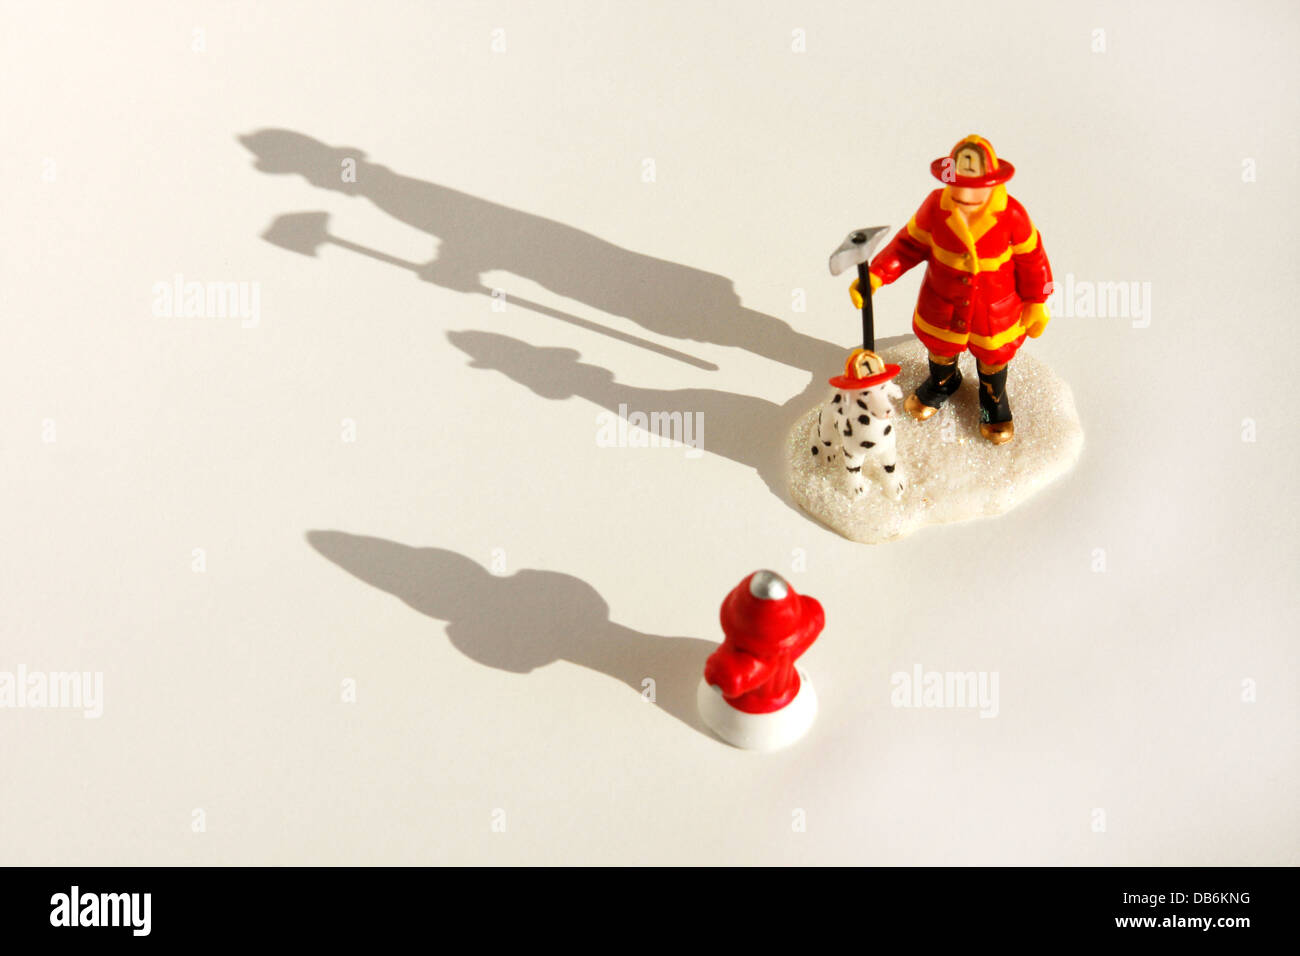 A fireman figurine with shadow. Focus on shadow Stock Photo